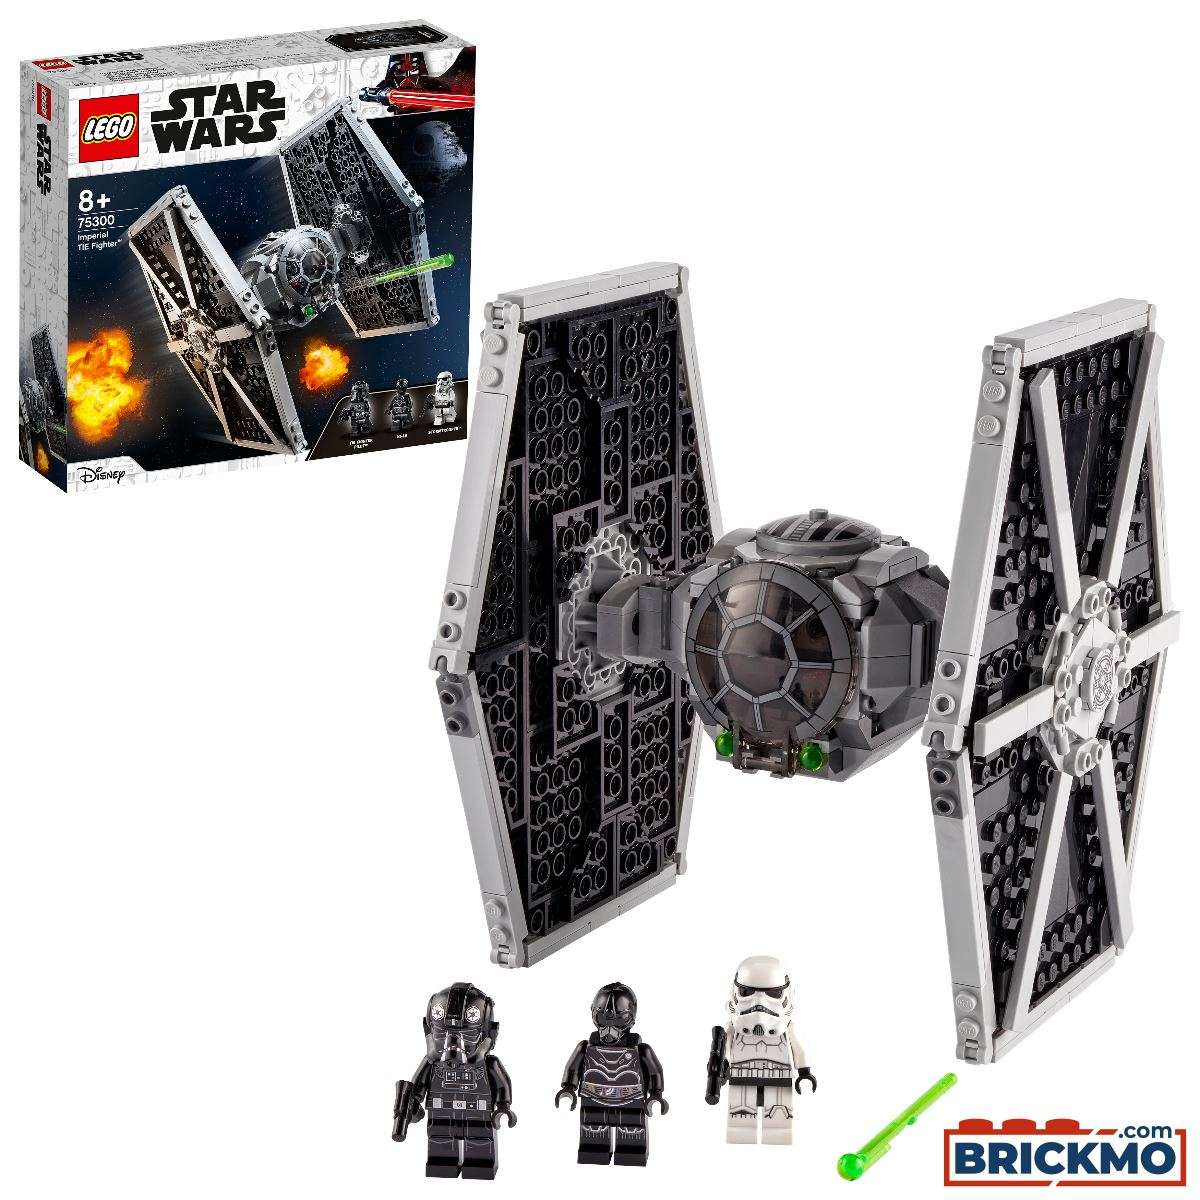 LEGO Star Wars 75300 Imperial TIE Fighter 75300